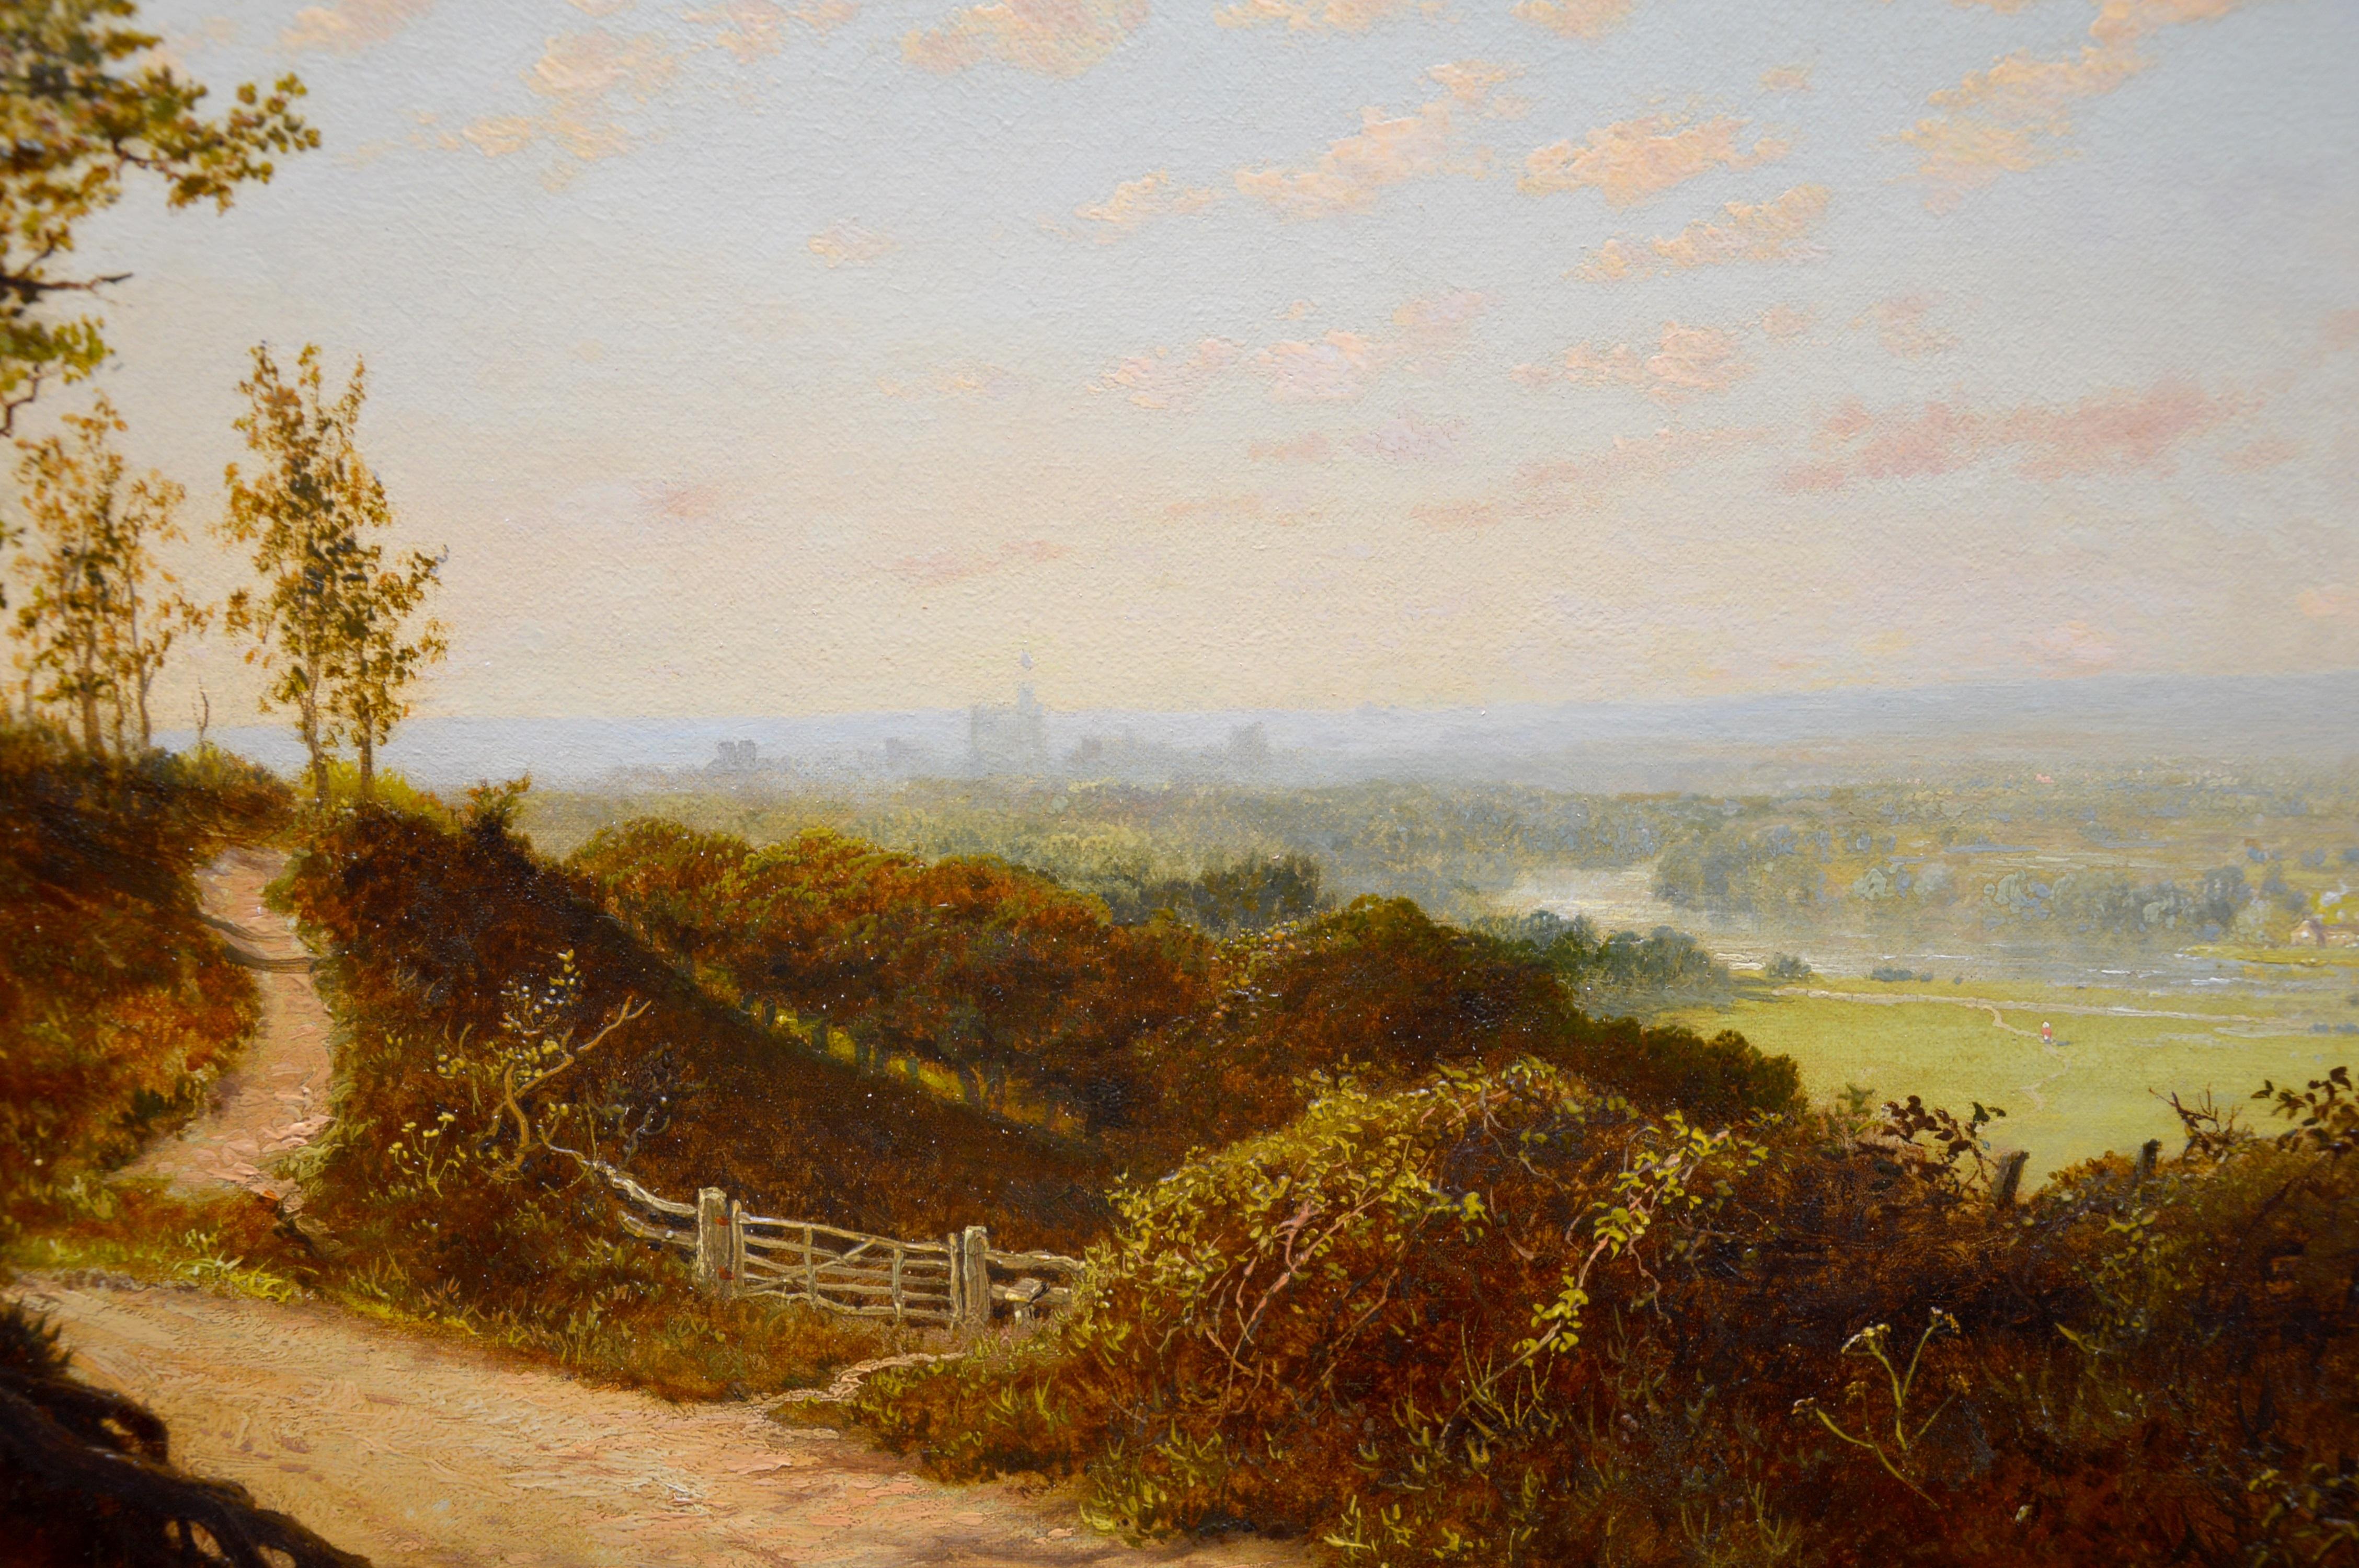 River Thames near Windsor - 19th Century Landscape Oil Painting of Royal Castle 4